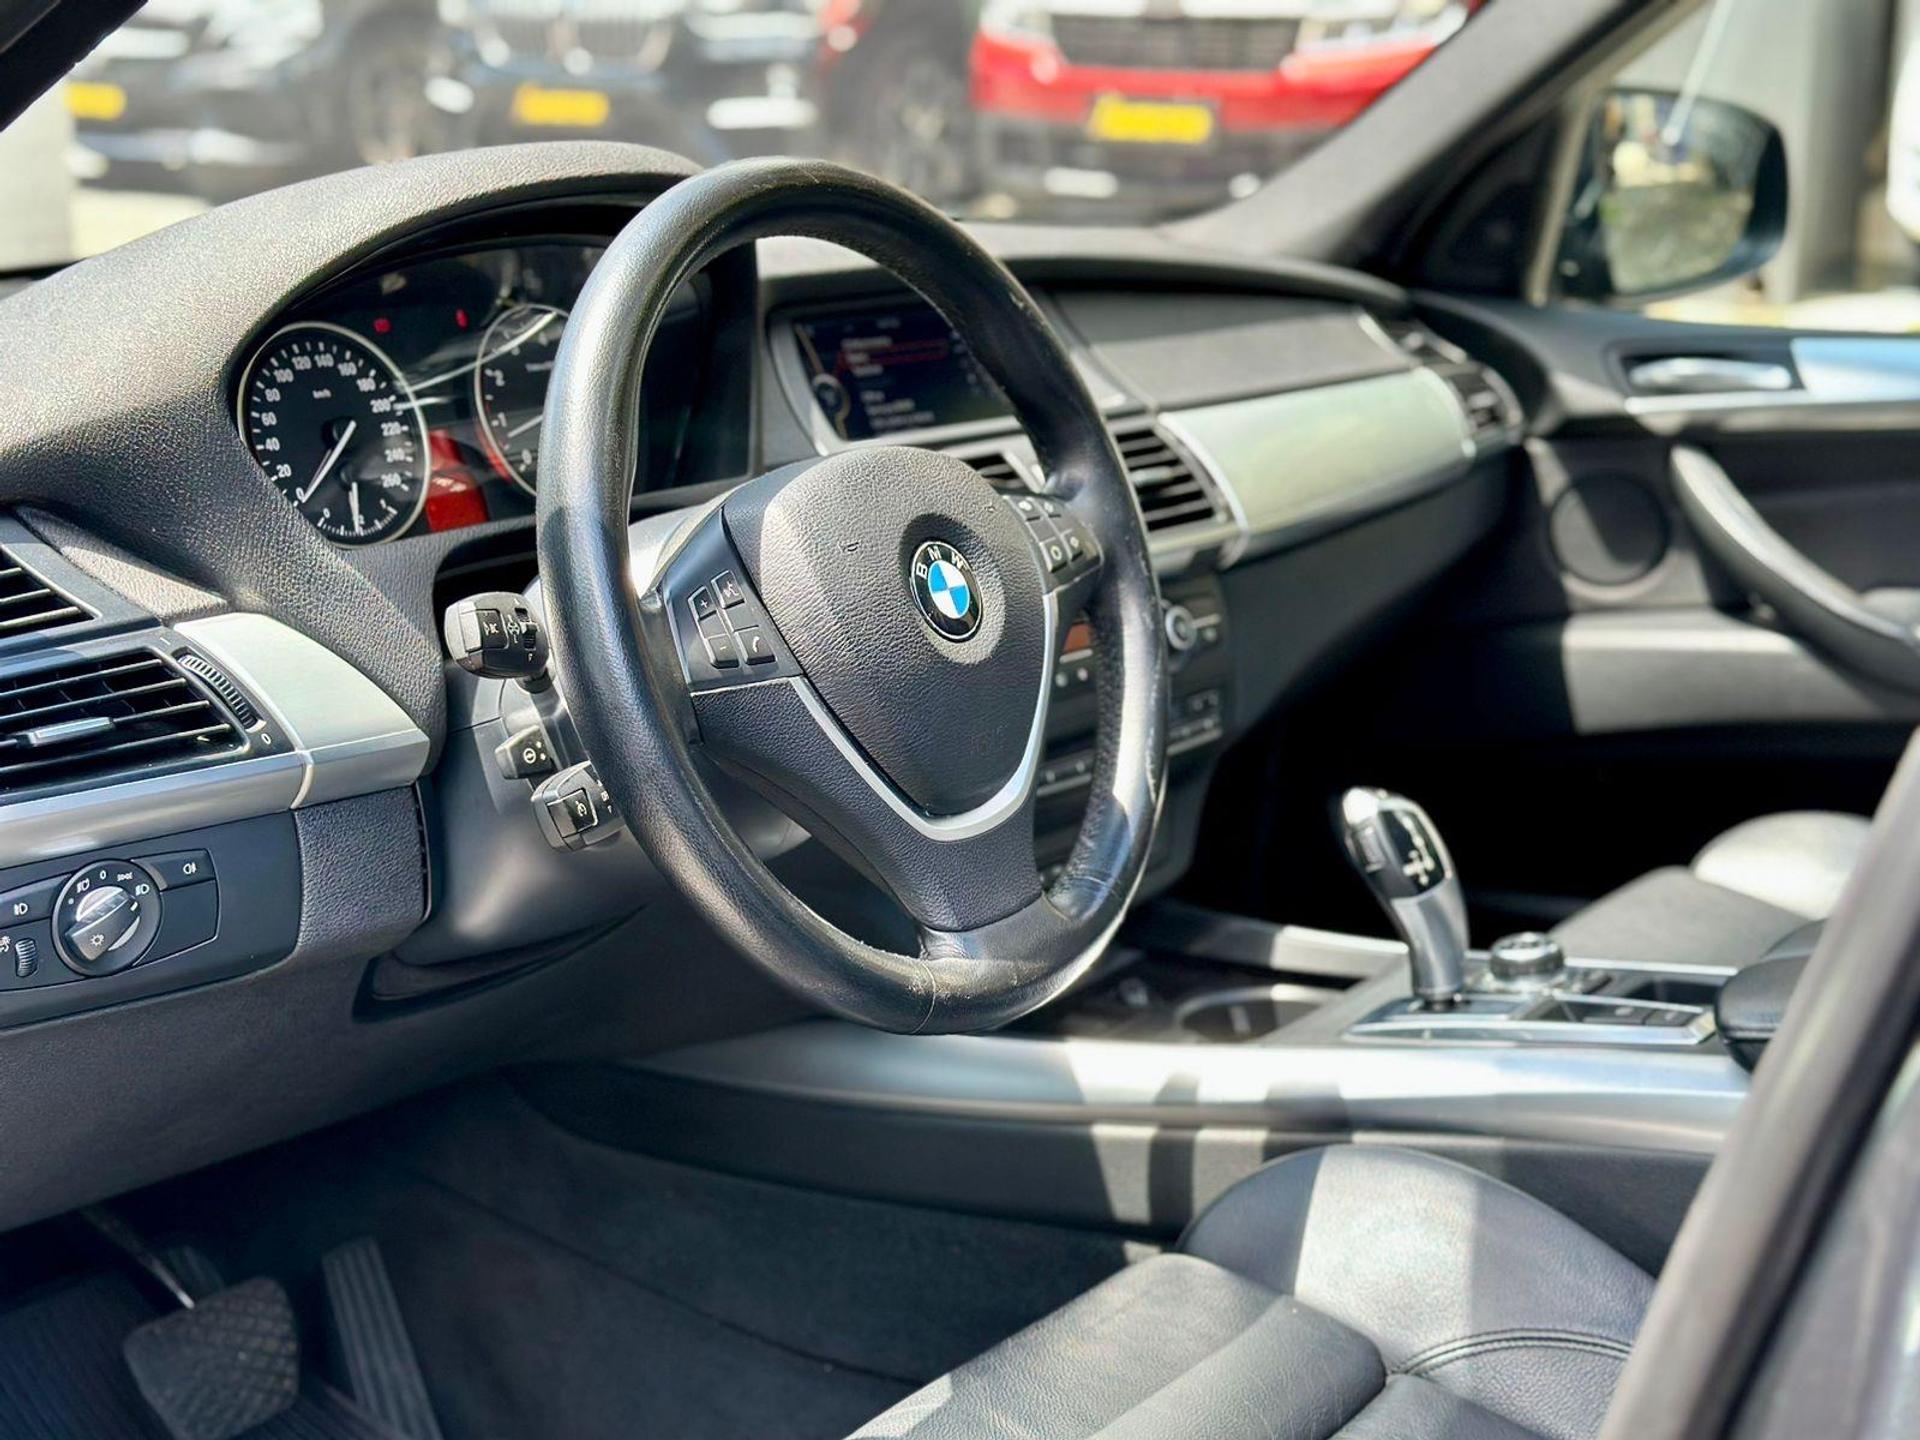 BMW X5 tabela fipe